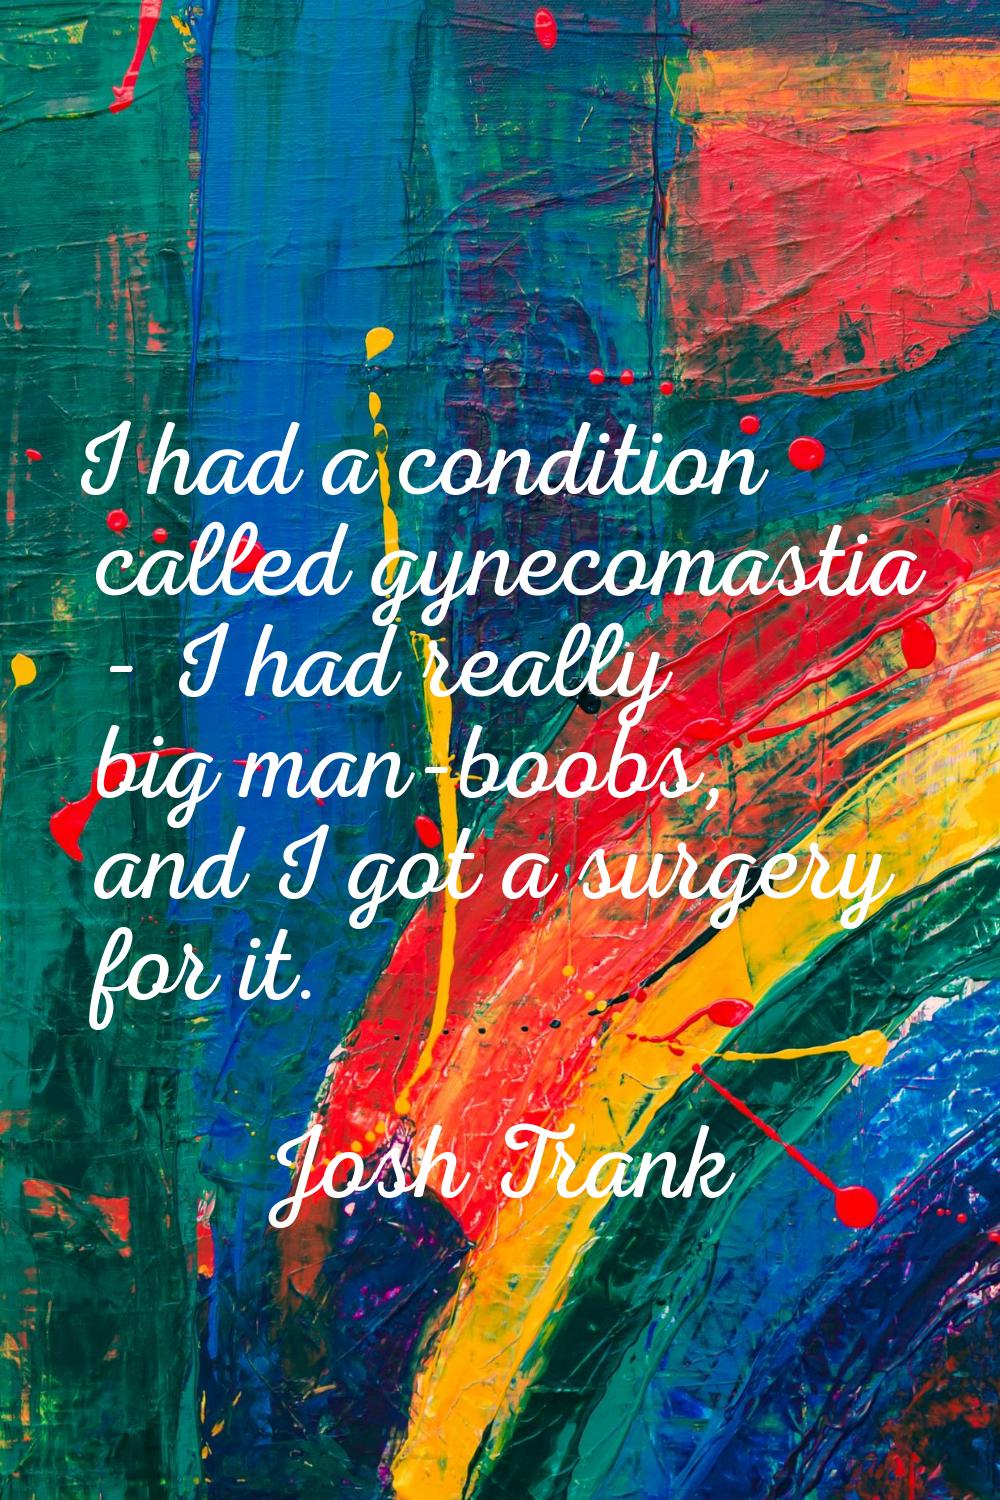 I had a condition called gynecomastia - I had really big man-boobs, and I got a surgery for it.